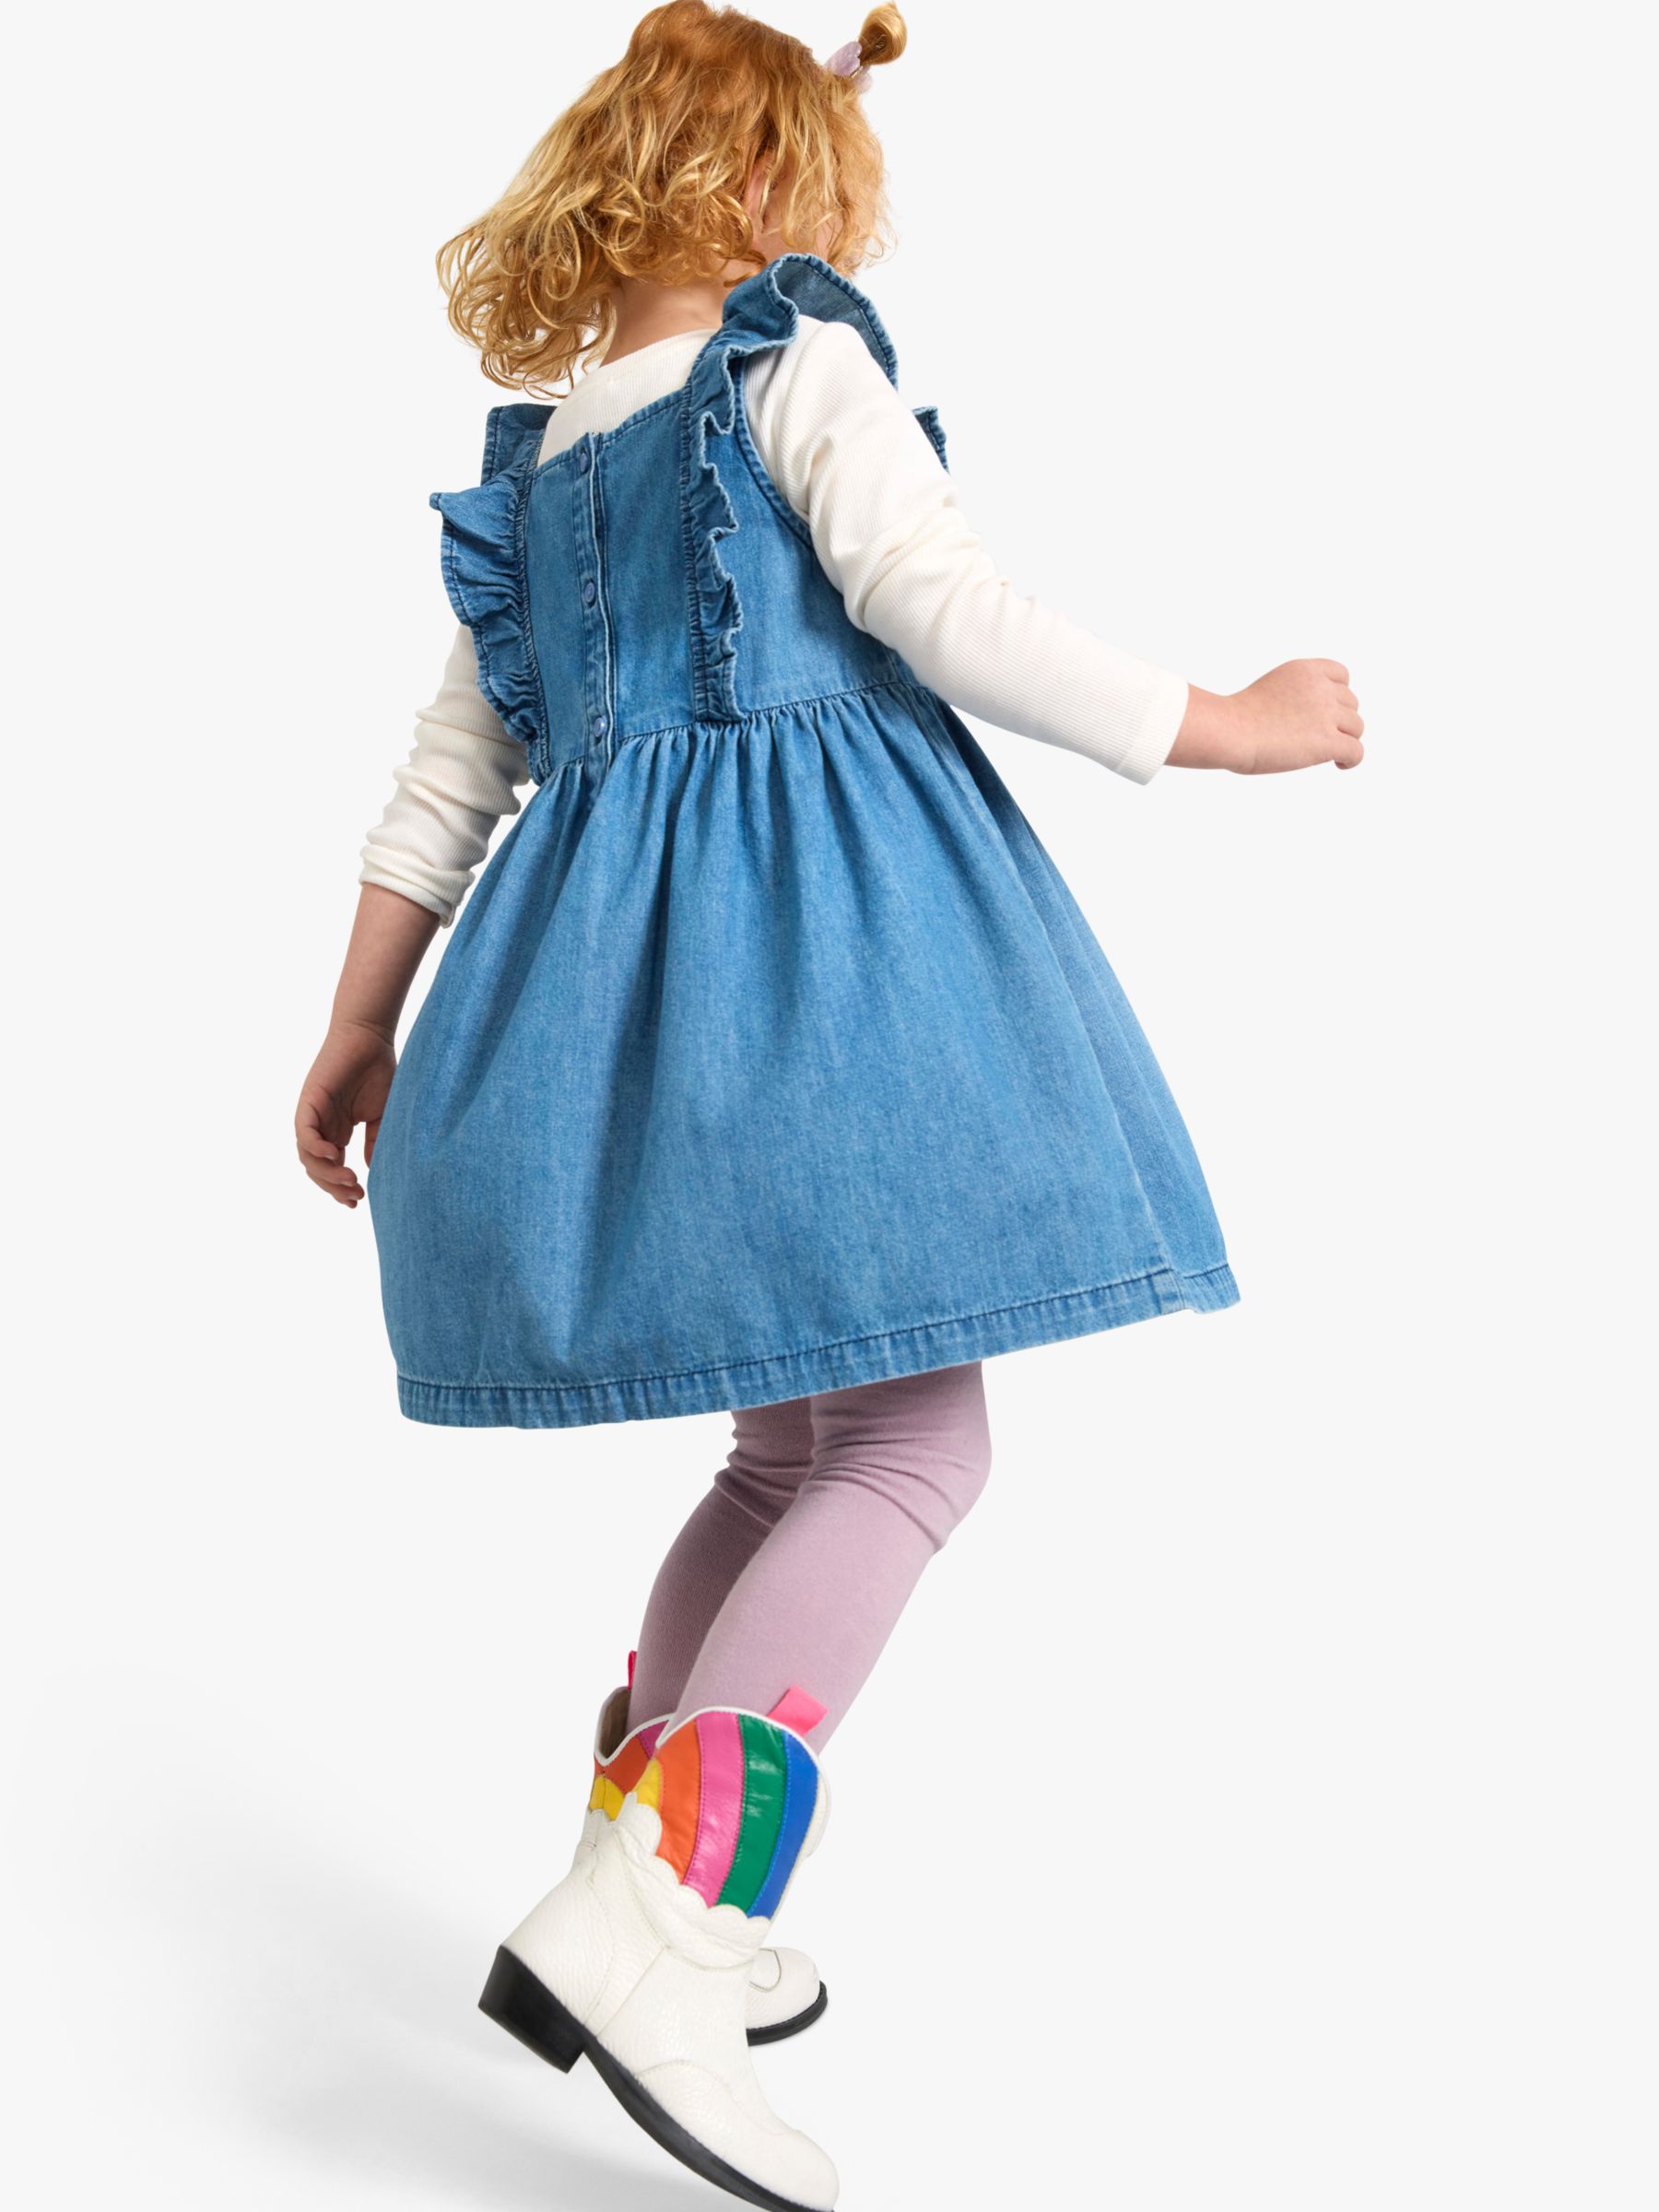 Buy Lindex Kids' Romantic Denim Bib Dress, Blue Online at johnlewis.com